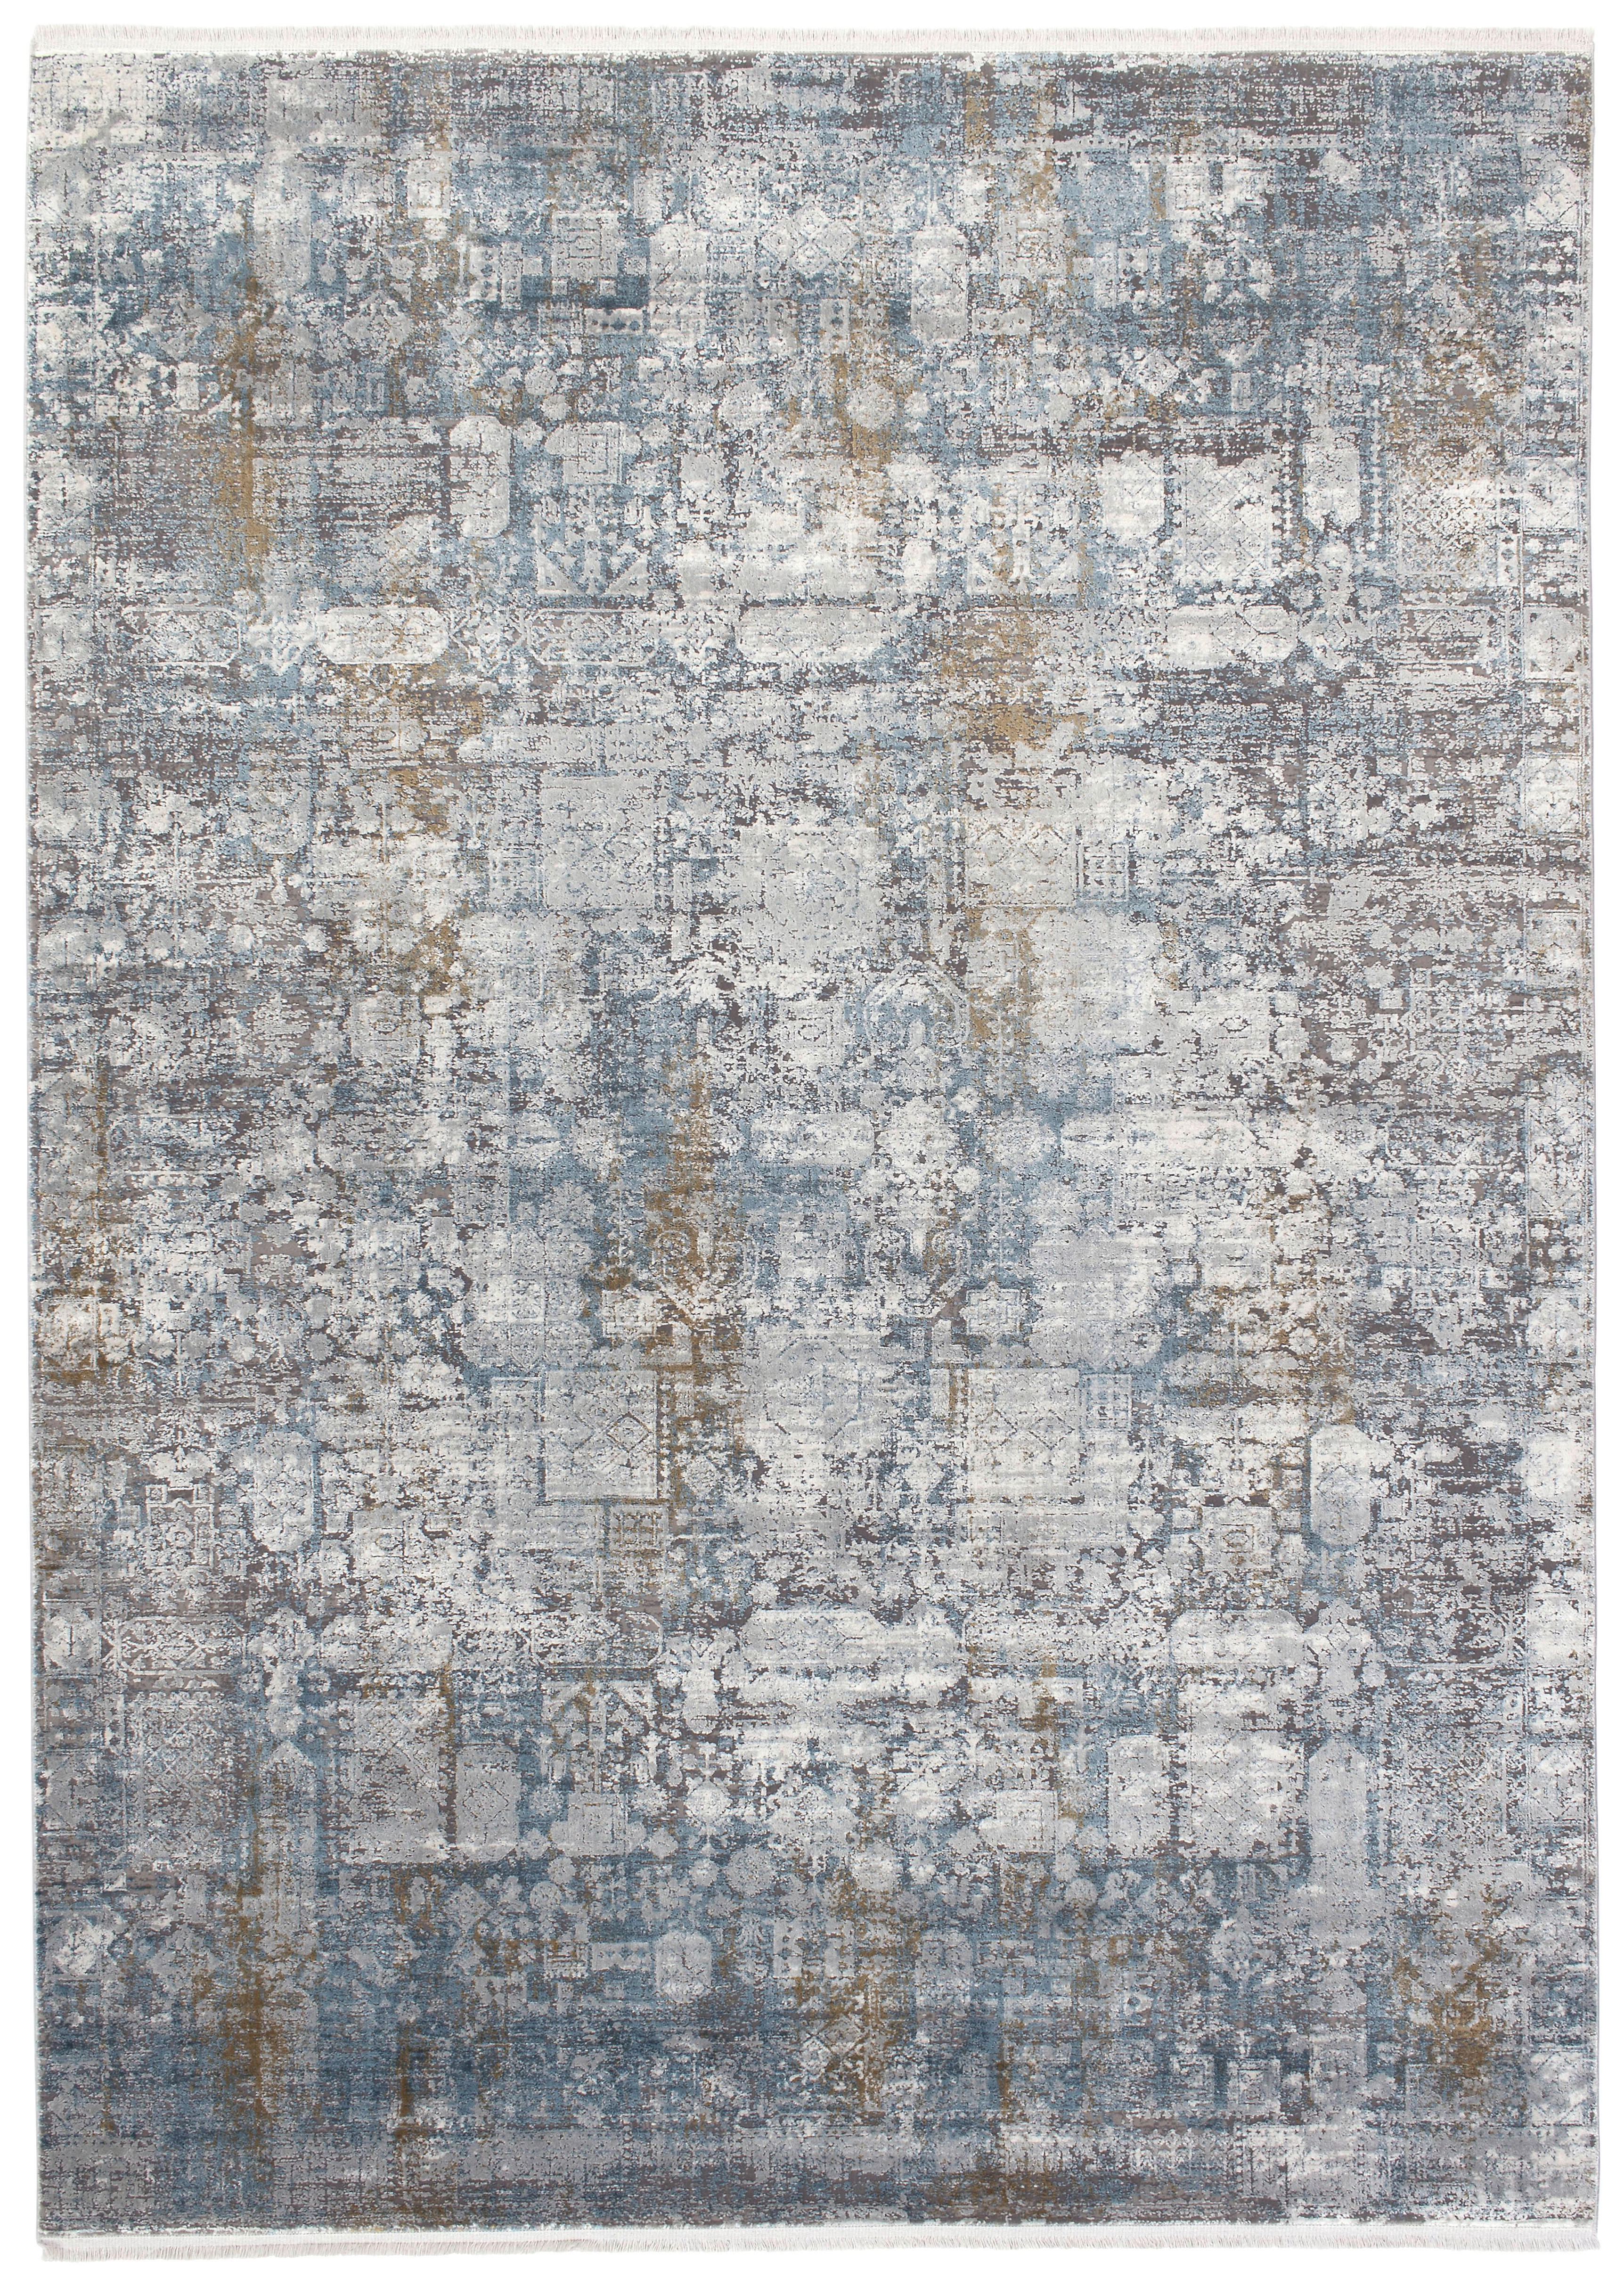 WEBTEPPICH 67/130 cm Sinfonia  - Blau/Grau, Design, Textil (67/130cm) - Musterring